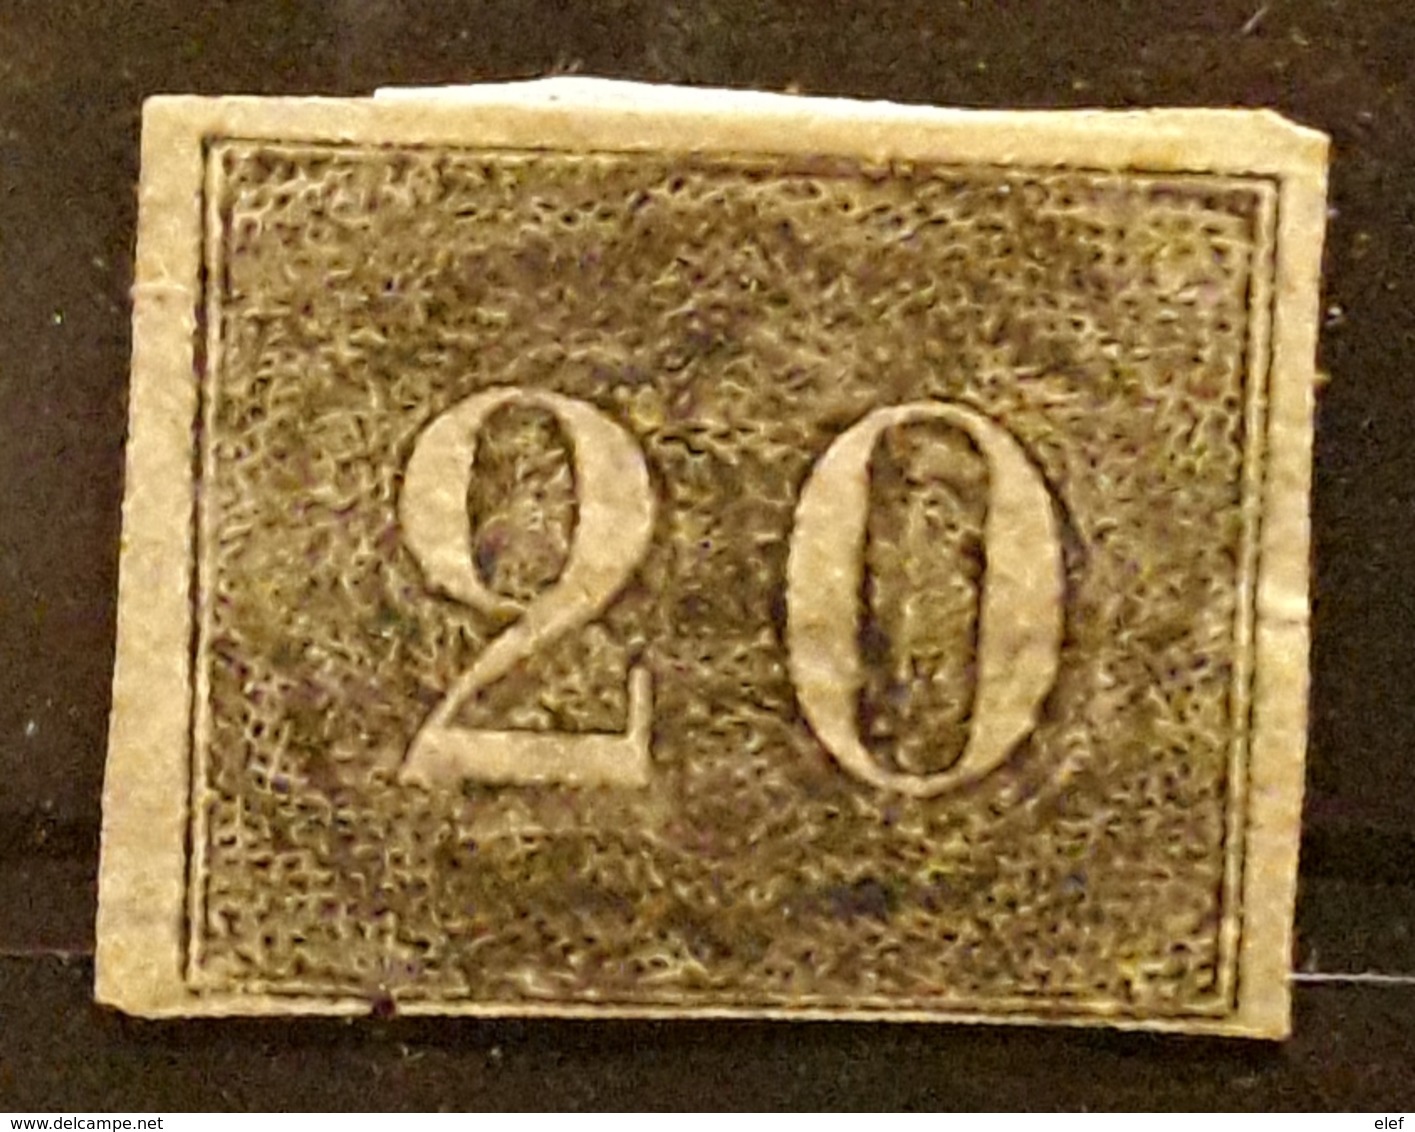 BRASIL BRAZIL BRESIL 1850 ,Petits Chiffres Yvert No 12 A, 20 R Noir Non Dentele Imperforate Neuf * MH  TB Cote 90 Euros - Ungebraucht